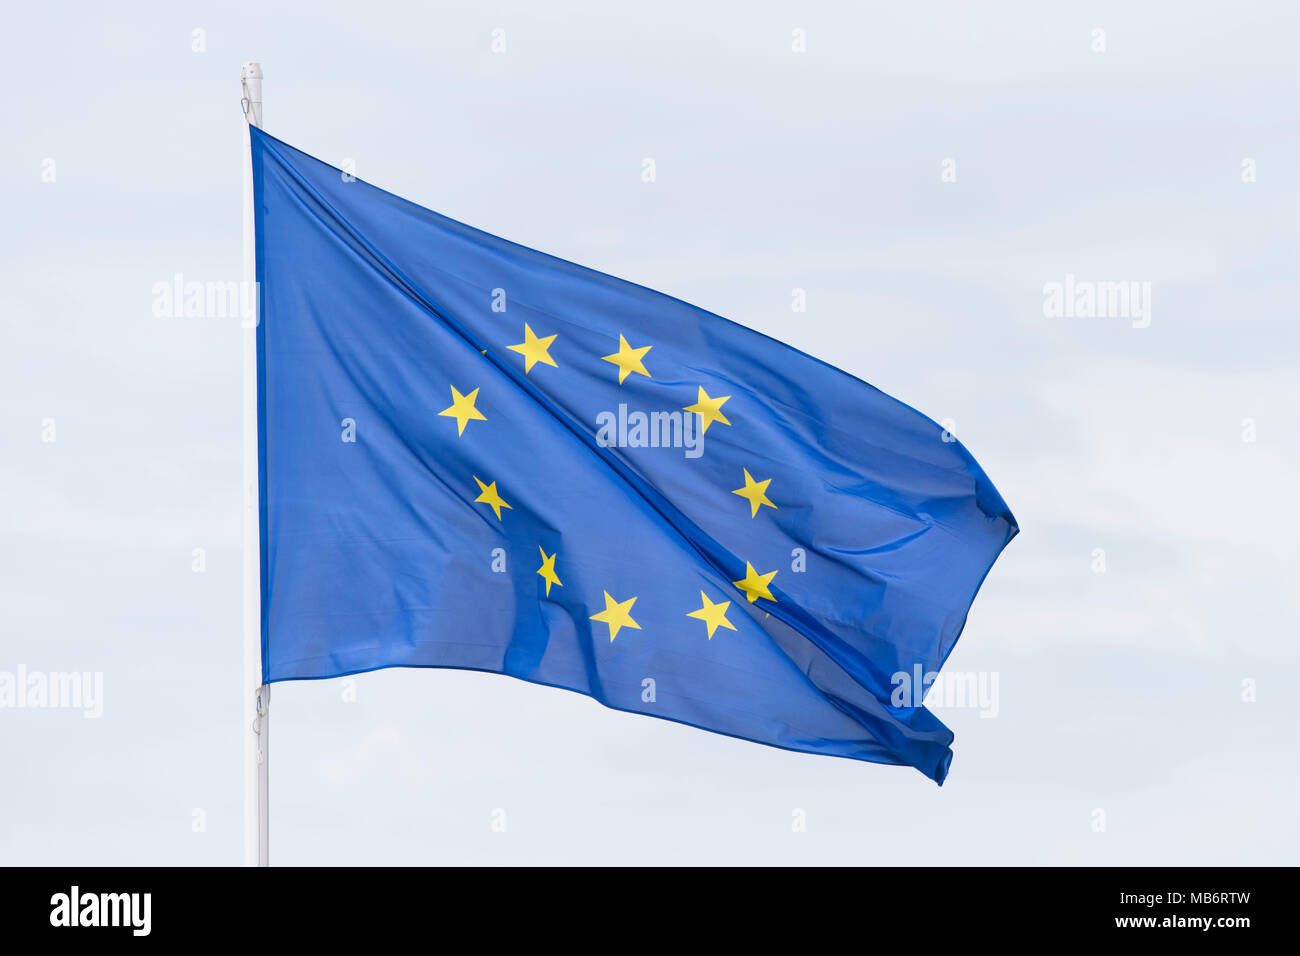 European Union (EU) flag flying in the wind. Stock Photo